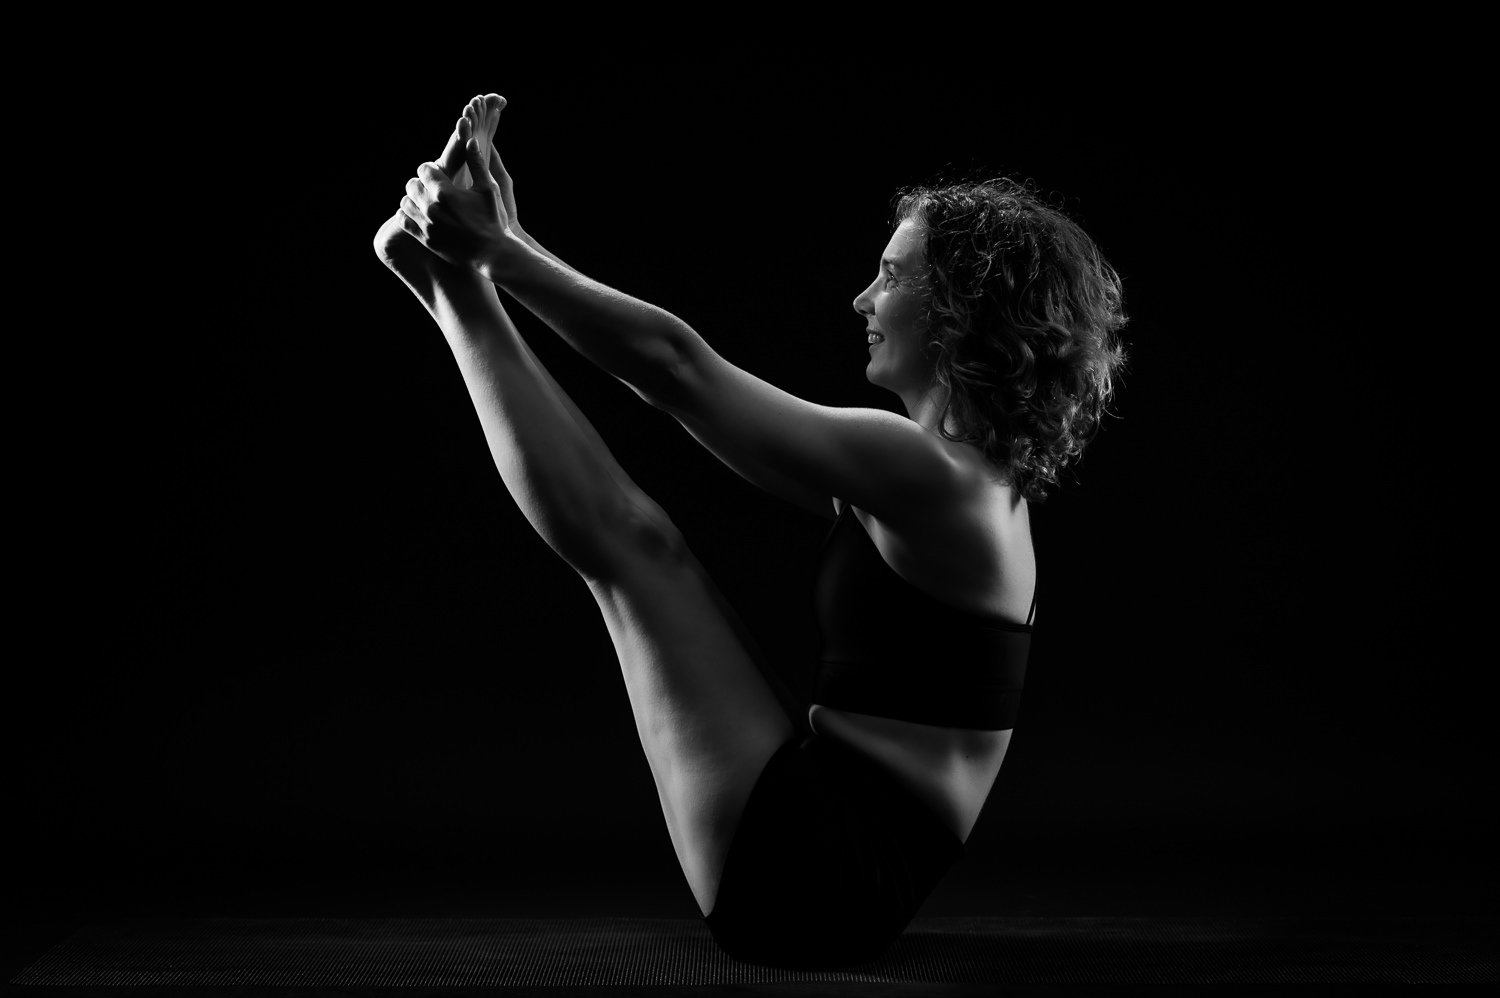 yoga-puurboudoir-artistiek-moody-zwart-wit-cfoto-caroline-3.jpg